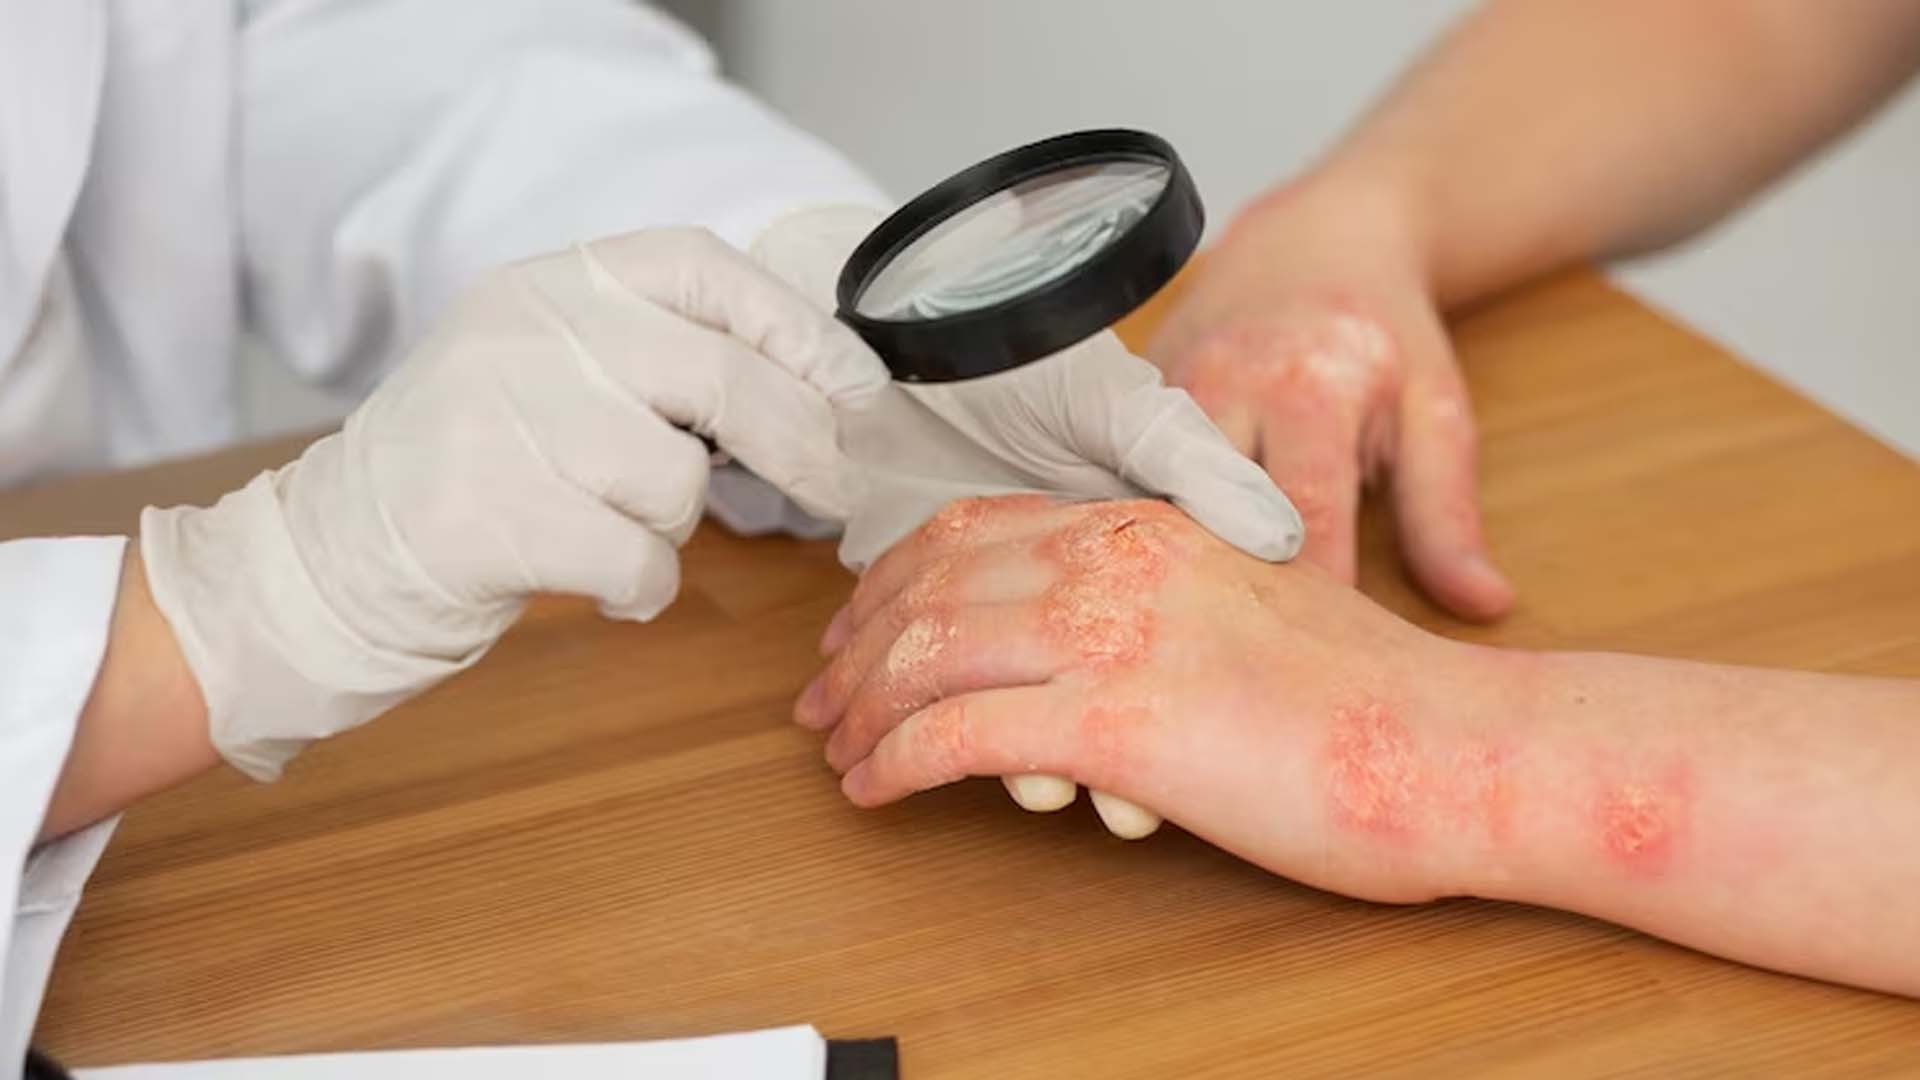 Doctor Examines Patients hand with Skin disease